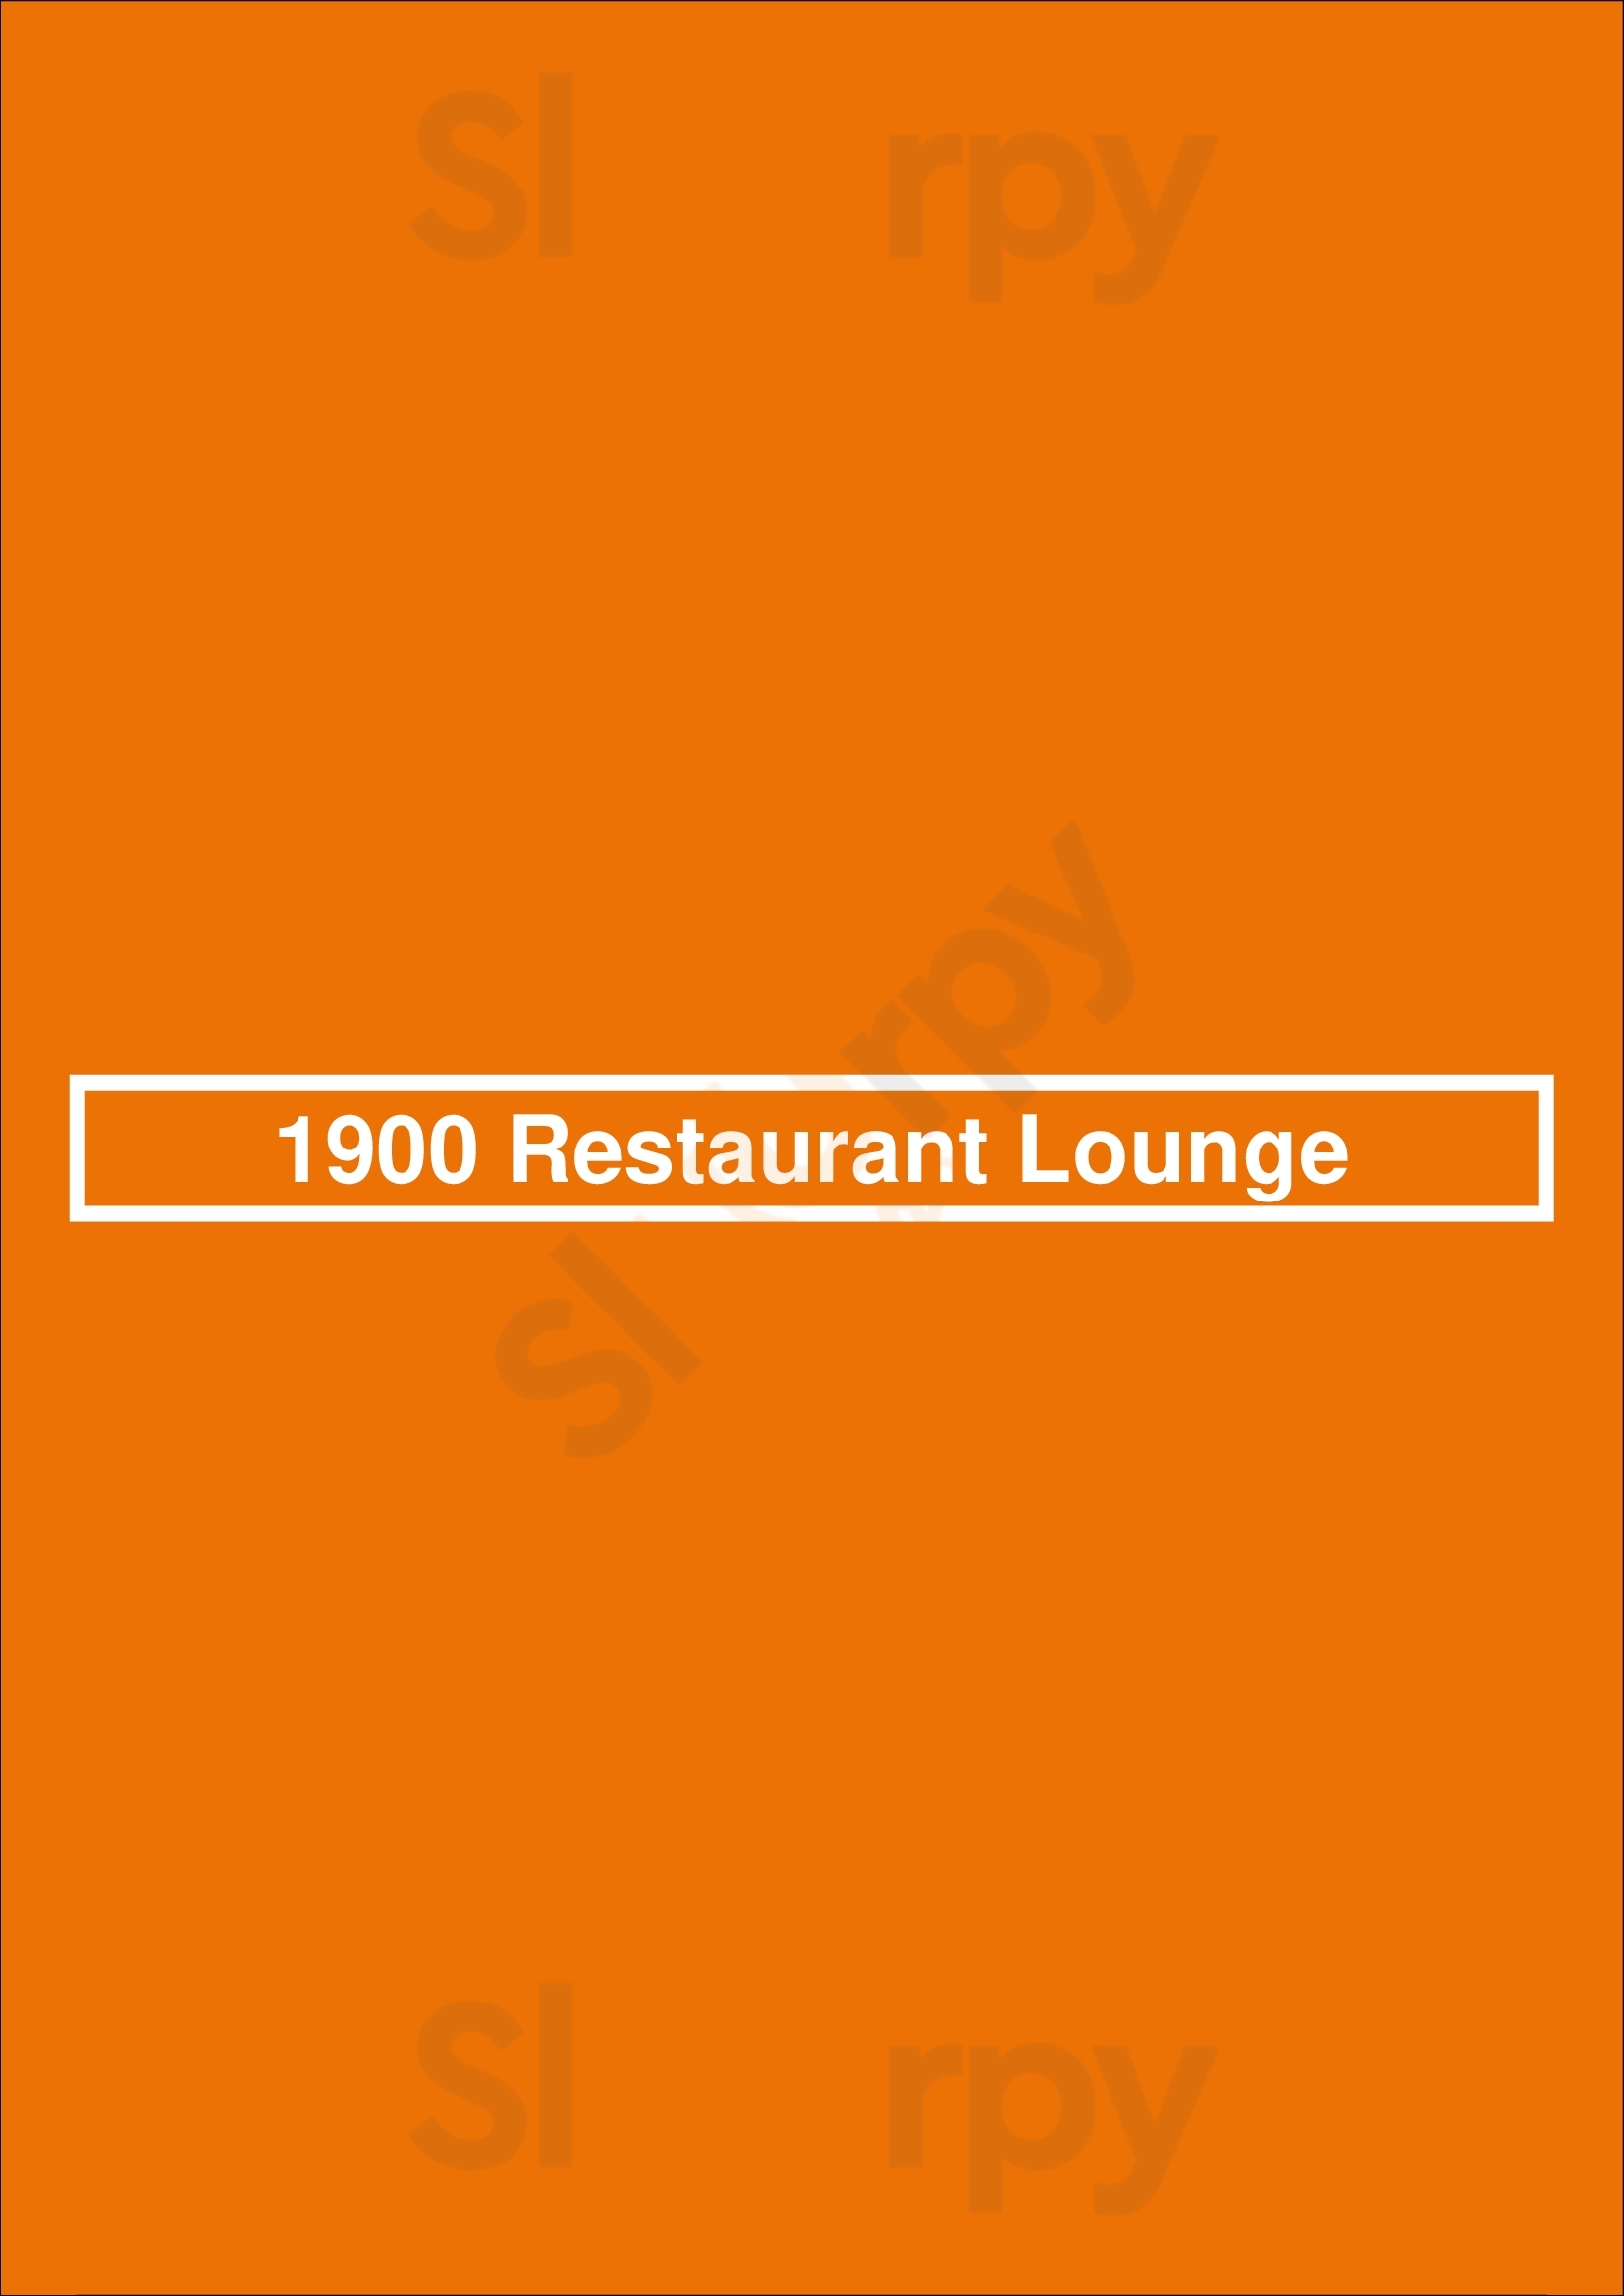 1900 Restaurant Lounge Wilmington Menu - 1